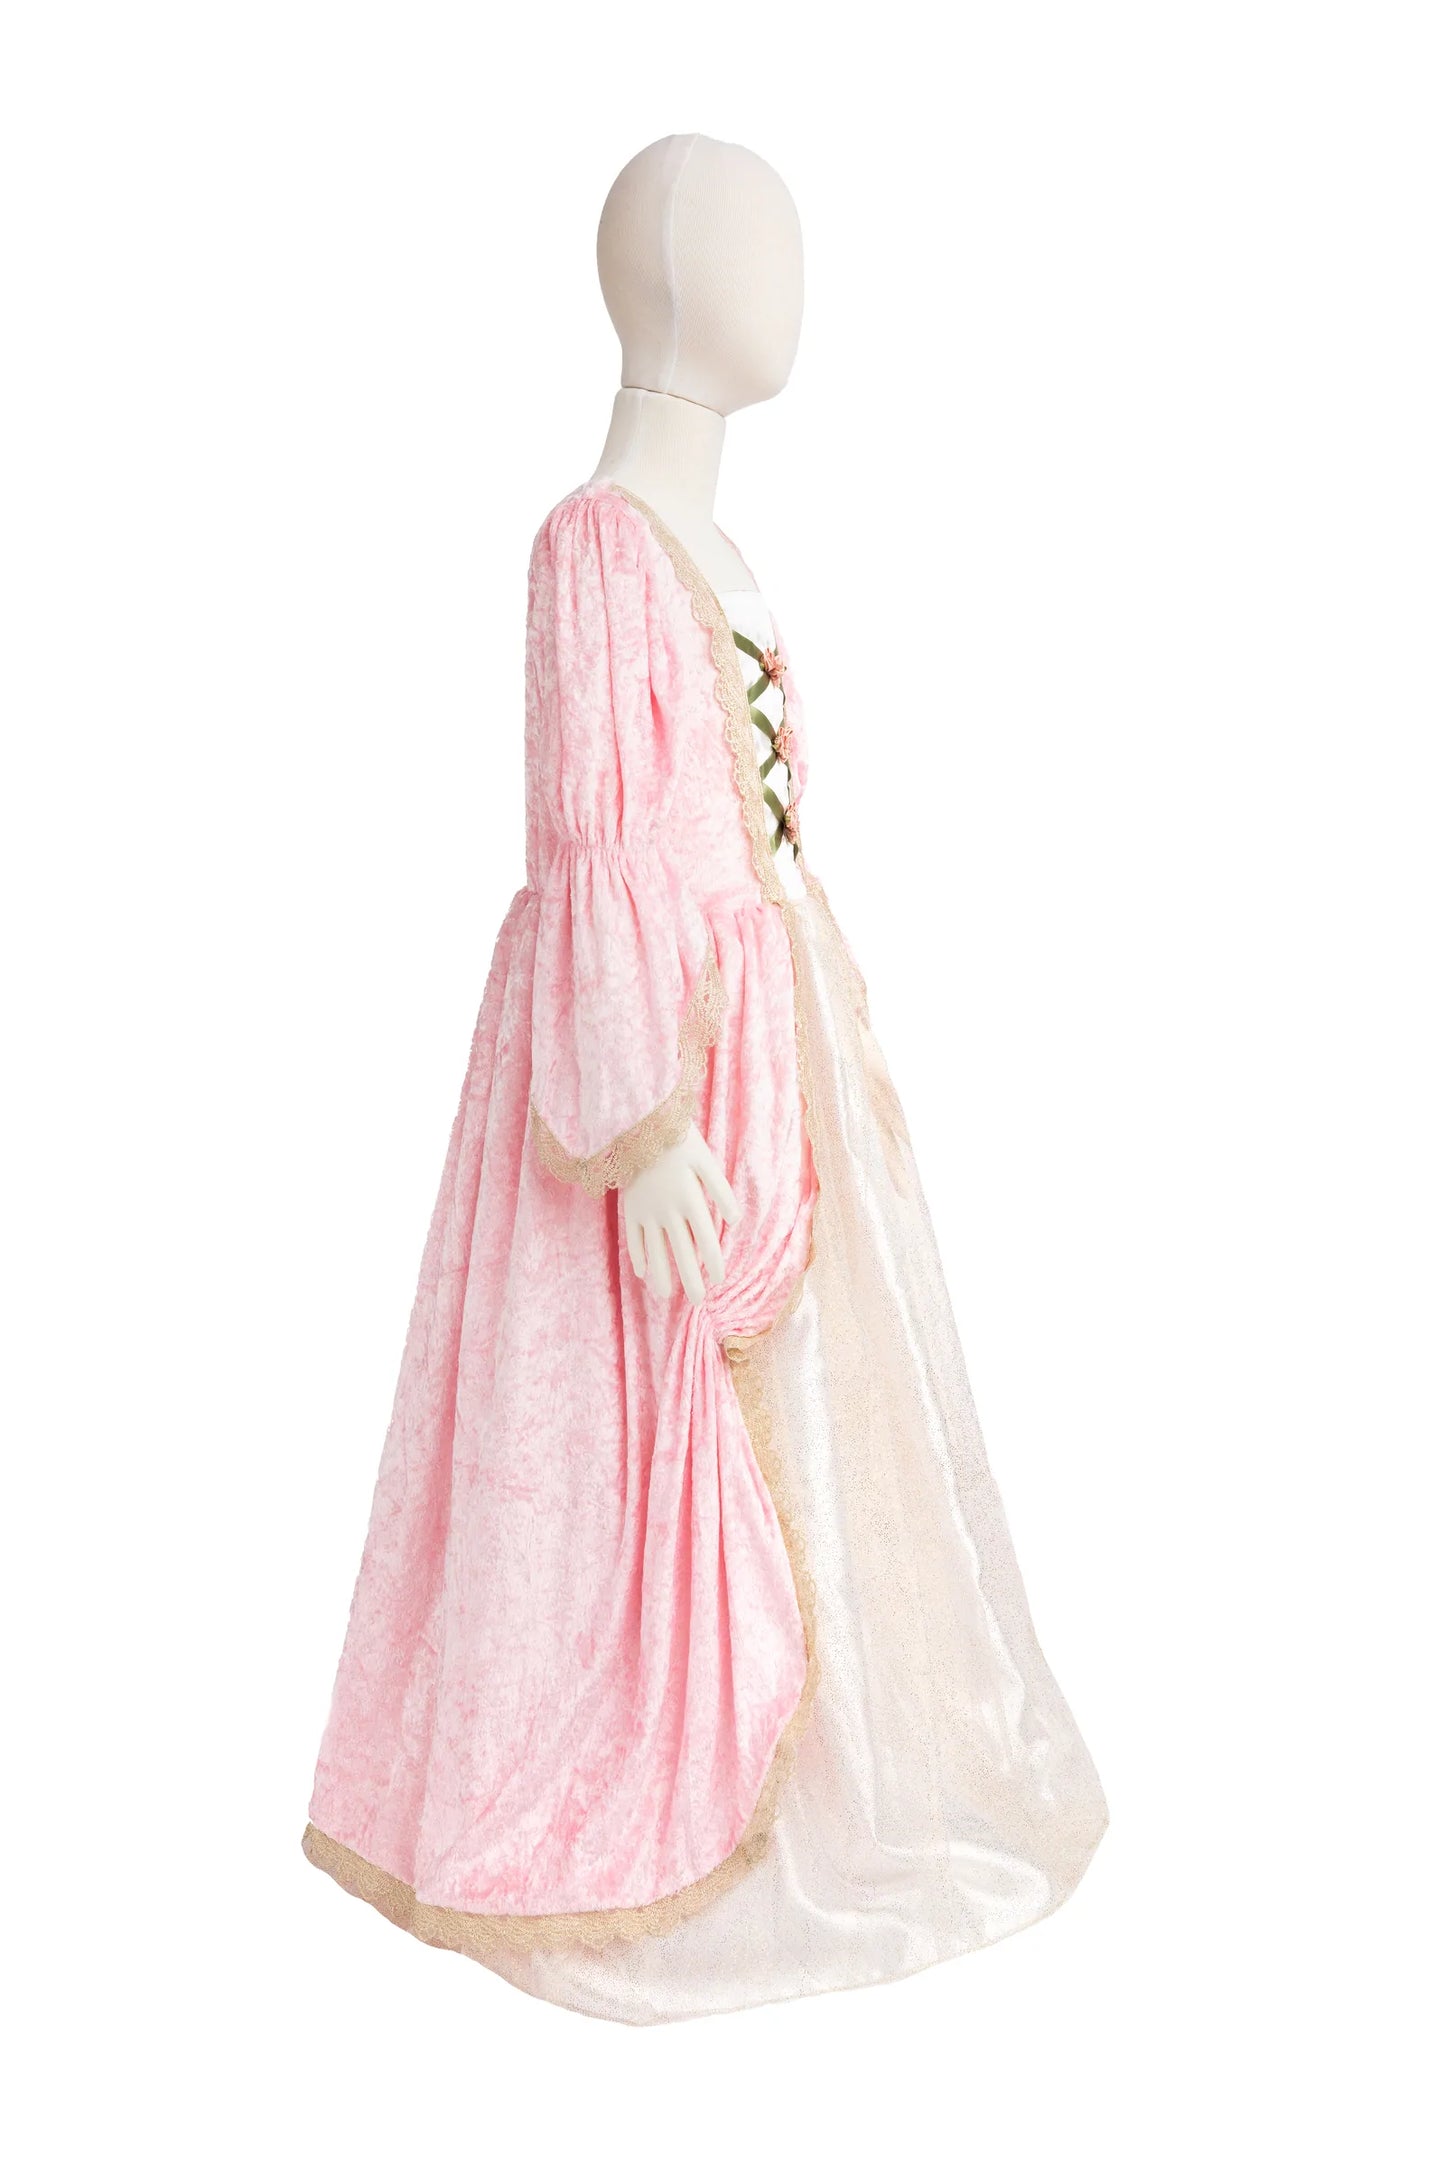 Dress Up - Royal Princess Dress (Pink/Ivory)